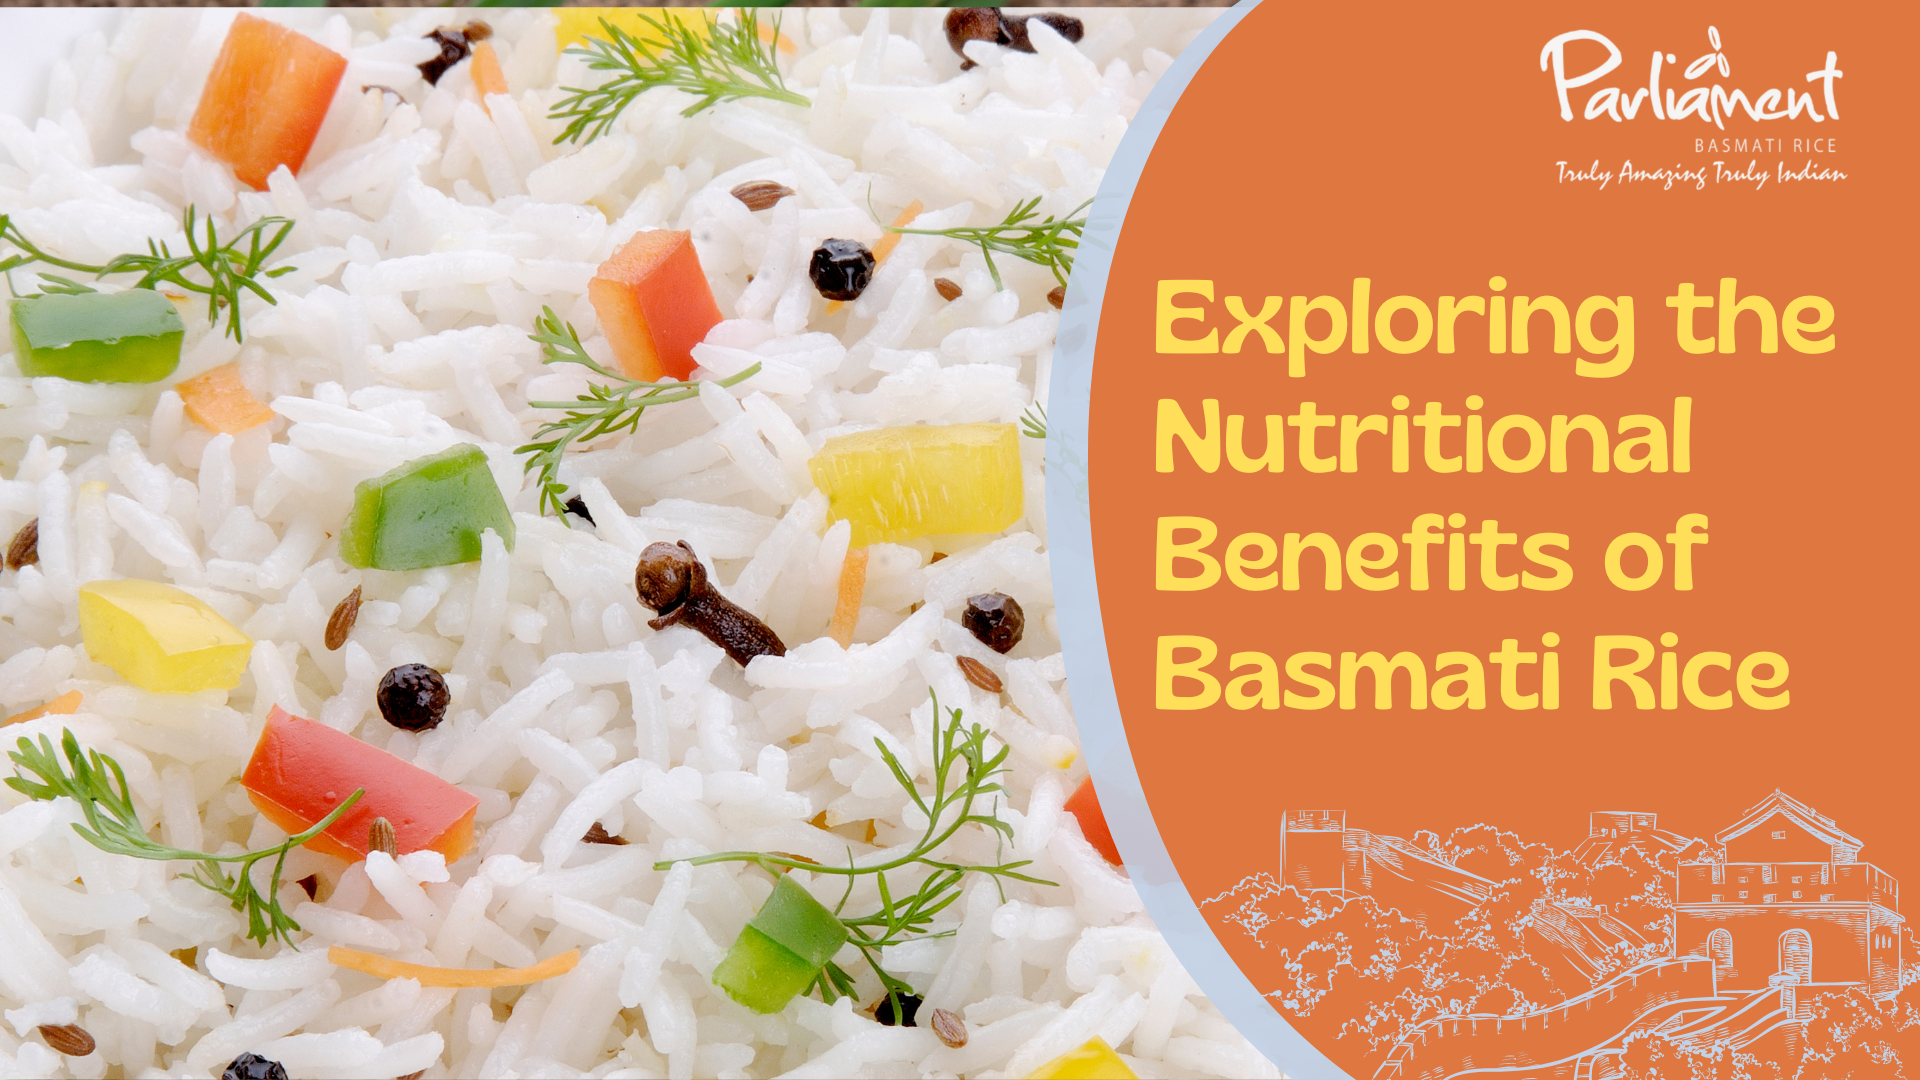  Benefits of Basmati Rice